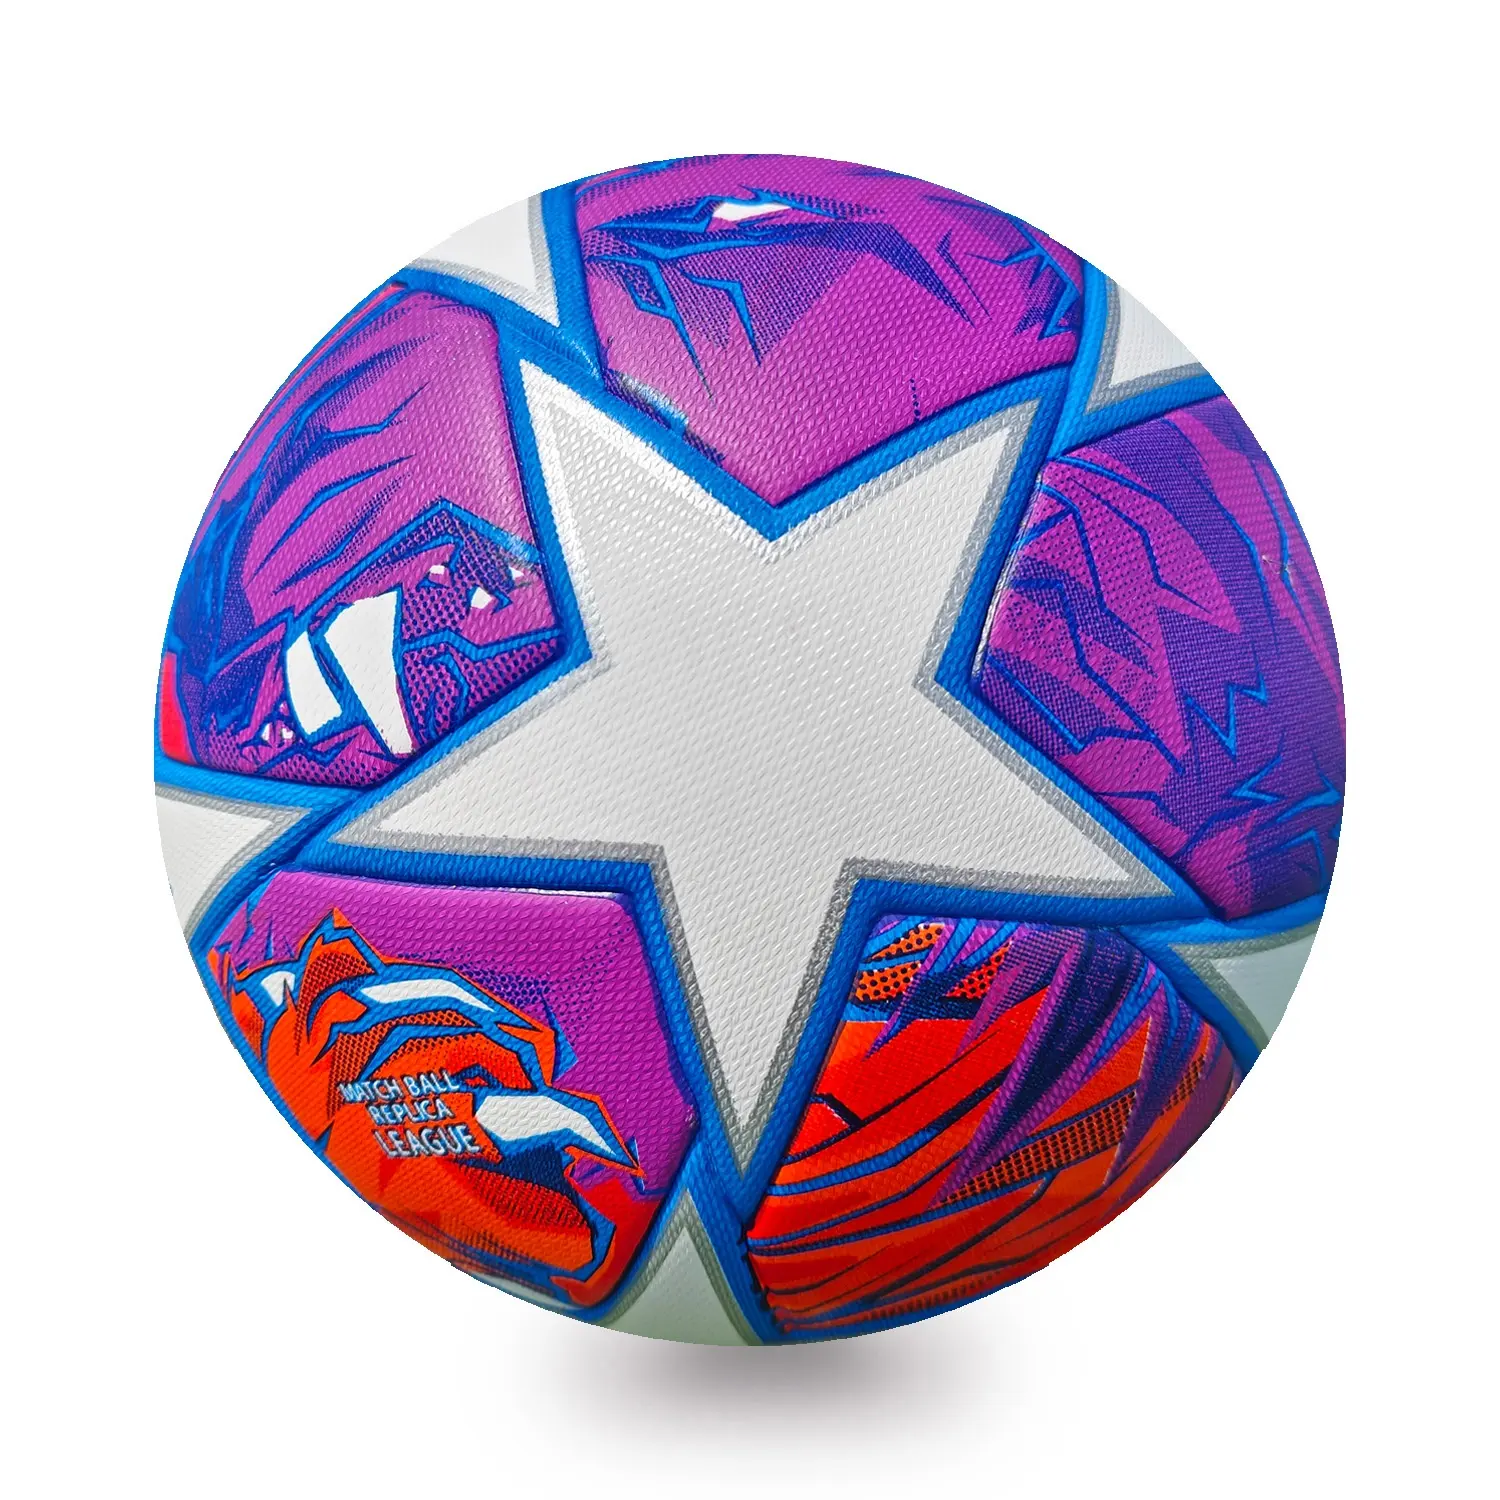 High Quality Seamless Star Soccer Ball Official Size 5 Size 4 Balls Training League Football soccerball